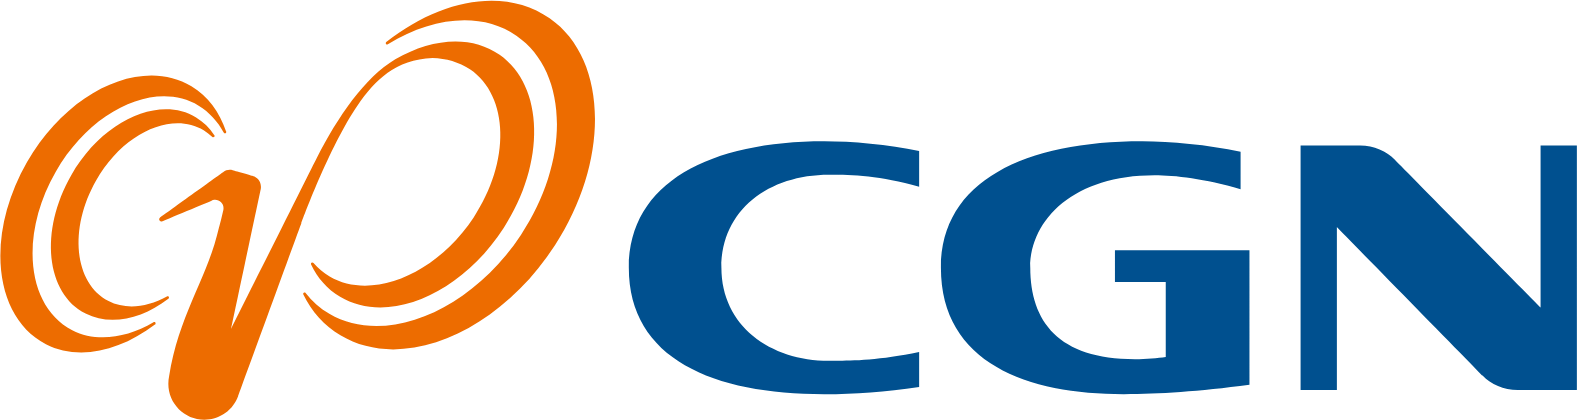 CGN Mining Company logo large (transparent PNG)